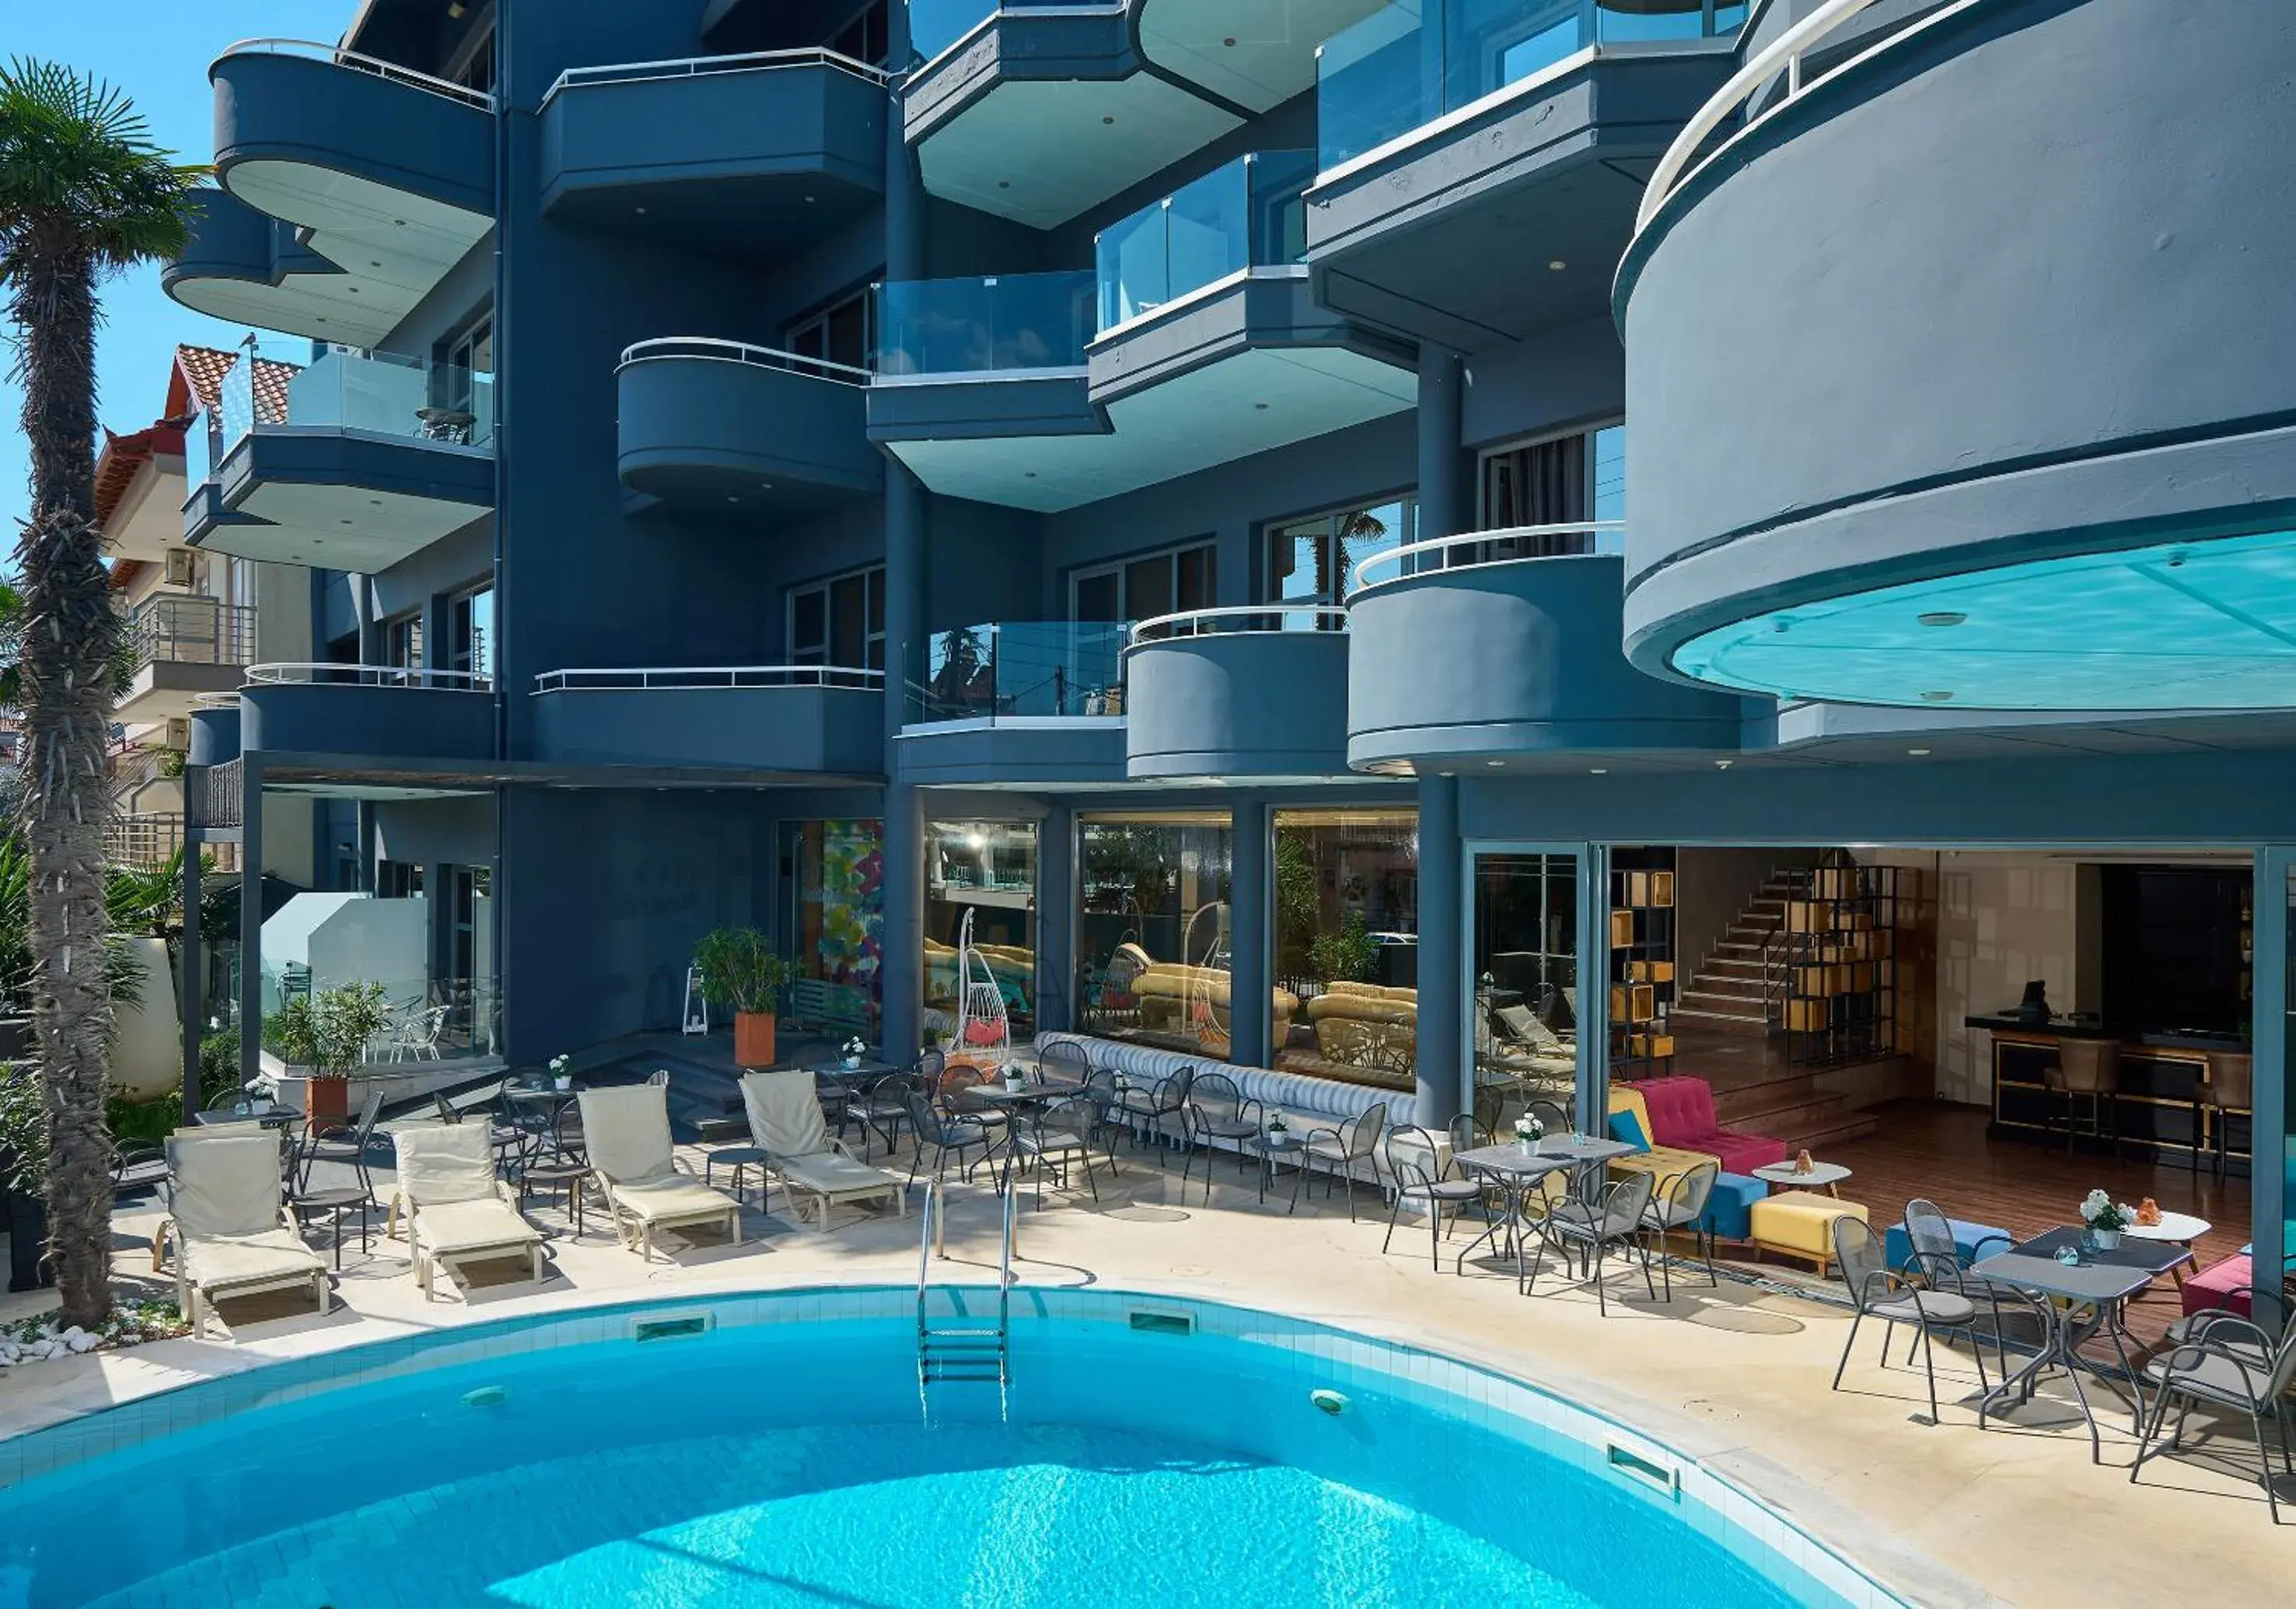 Property building, Swimming Pool in Mediterranean Resort